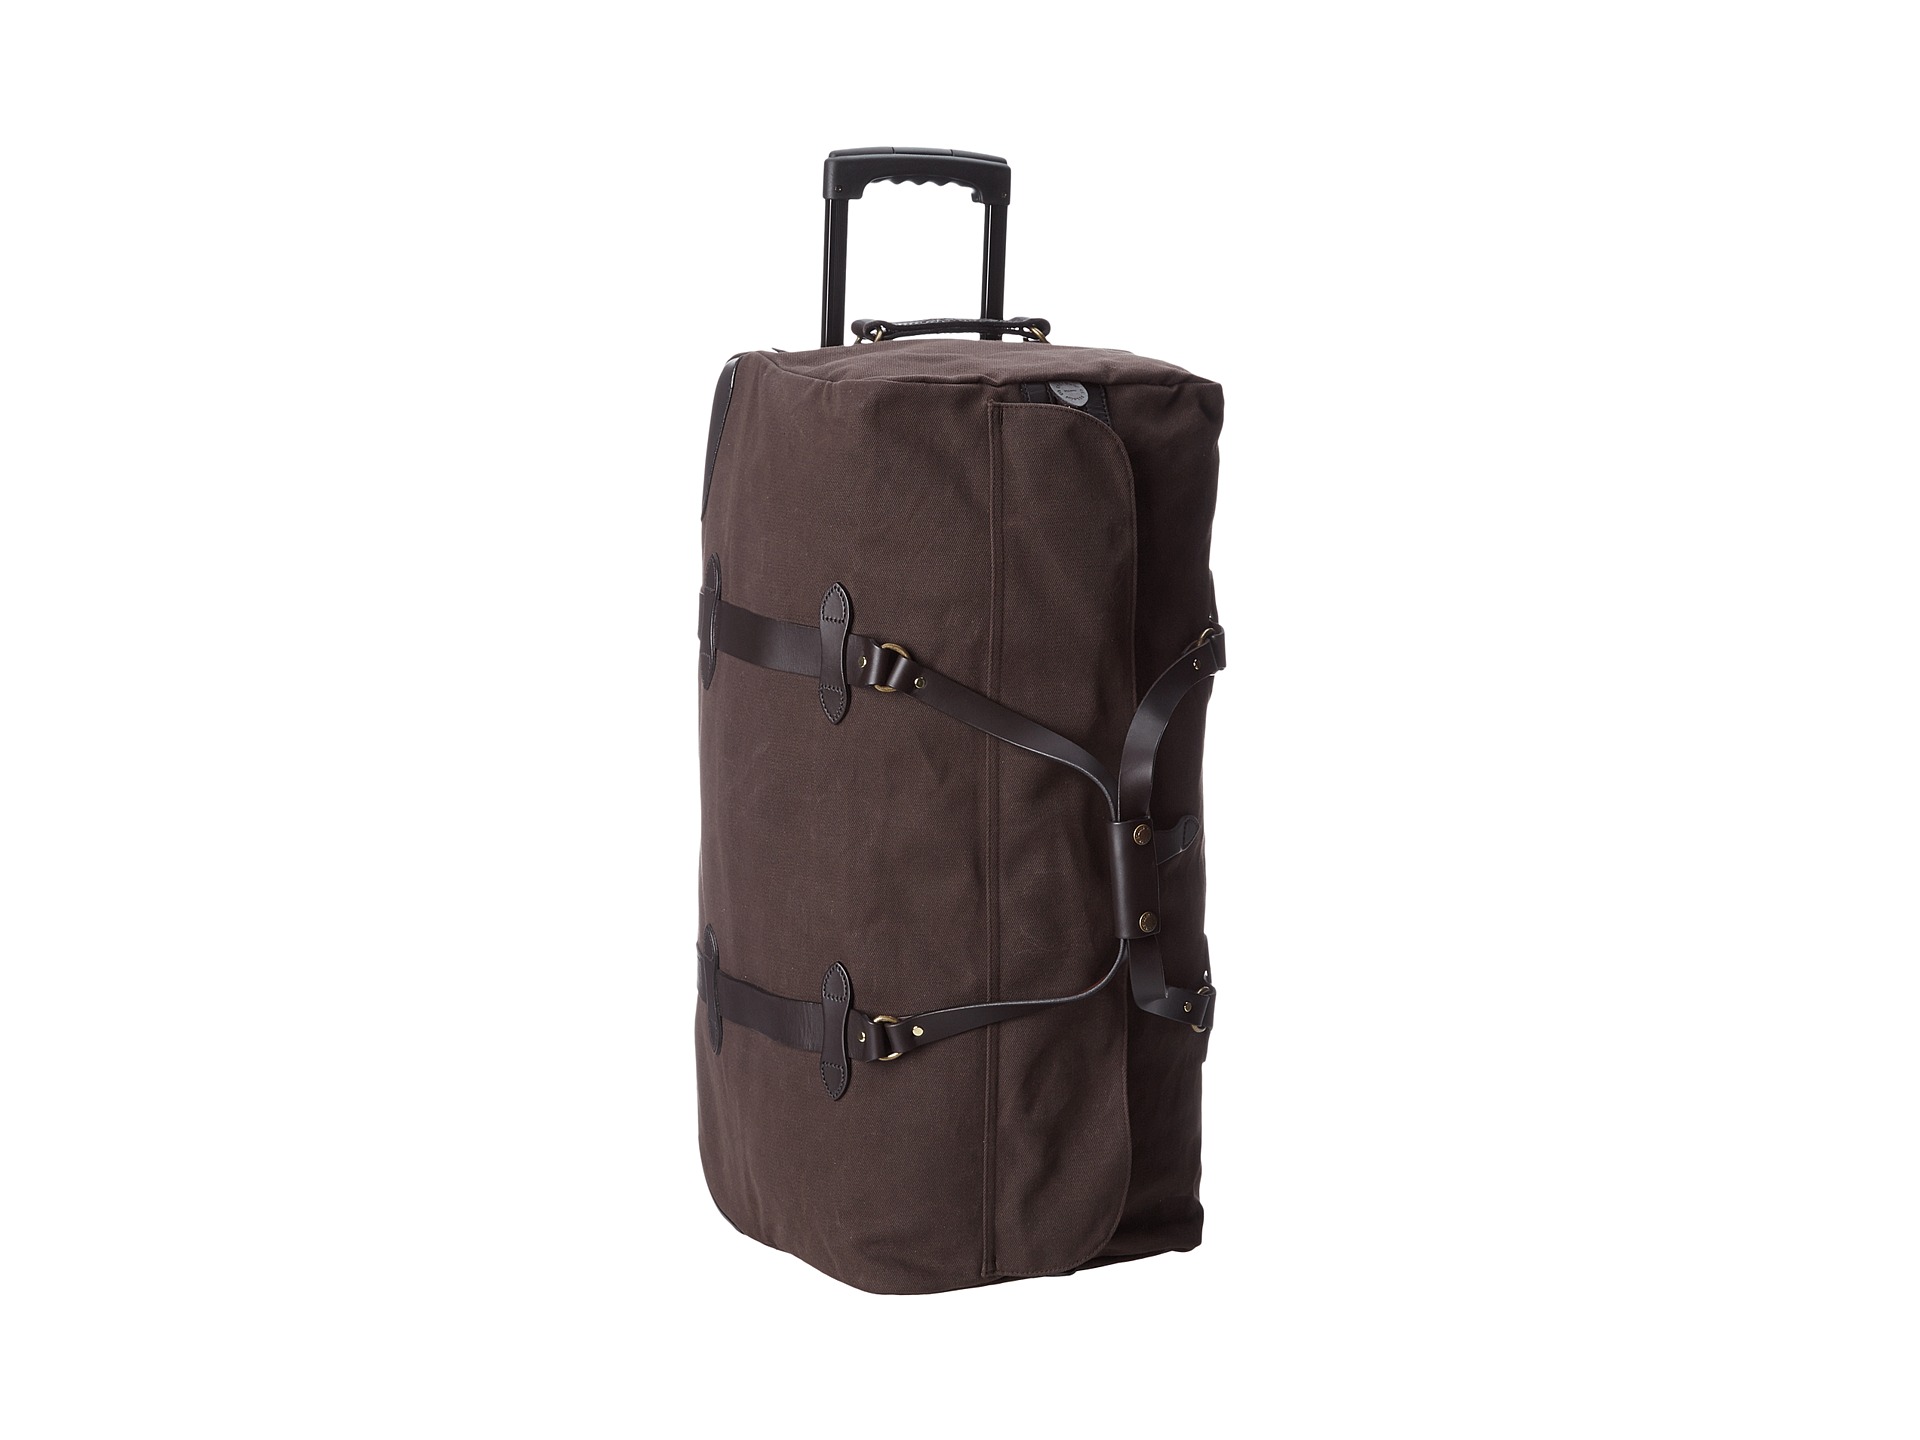 Filson Large Wheeled Duffle Bag | Shipped Free at Zappos